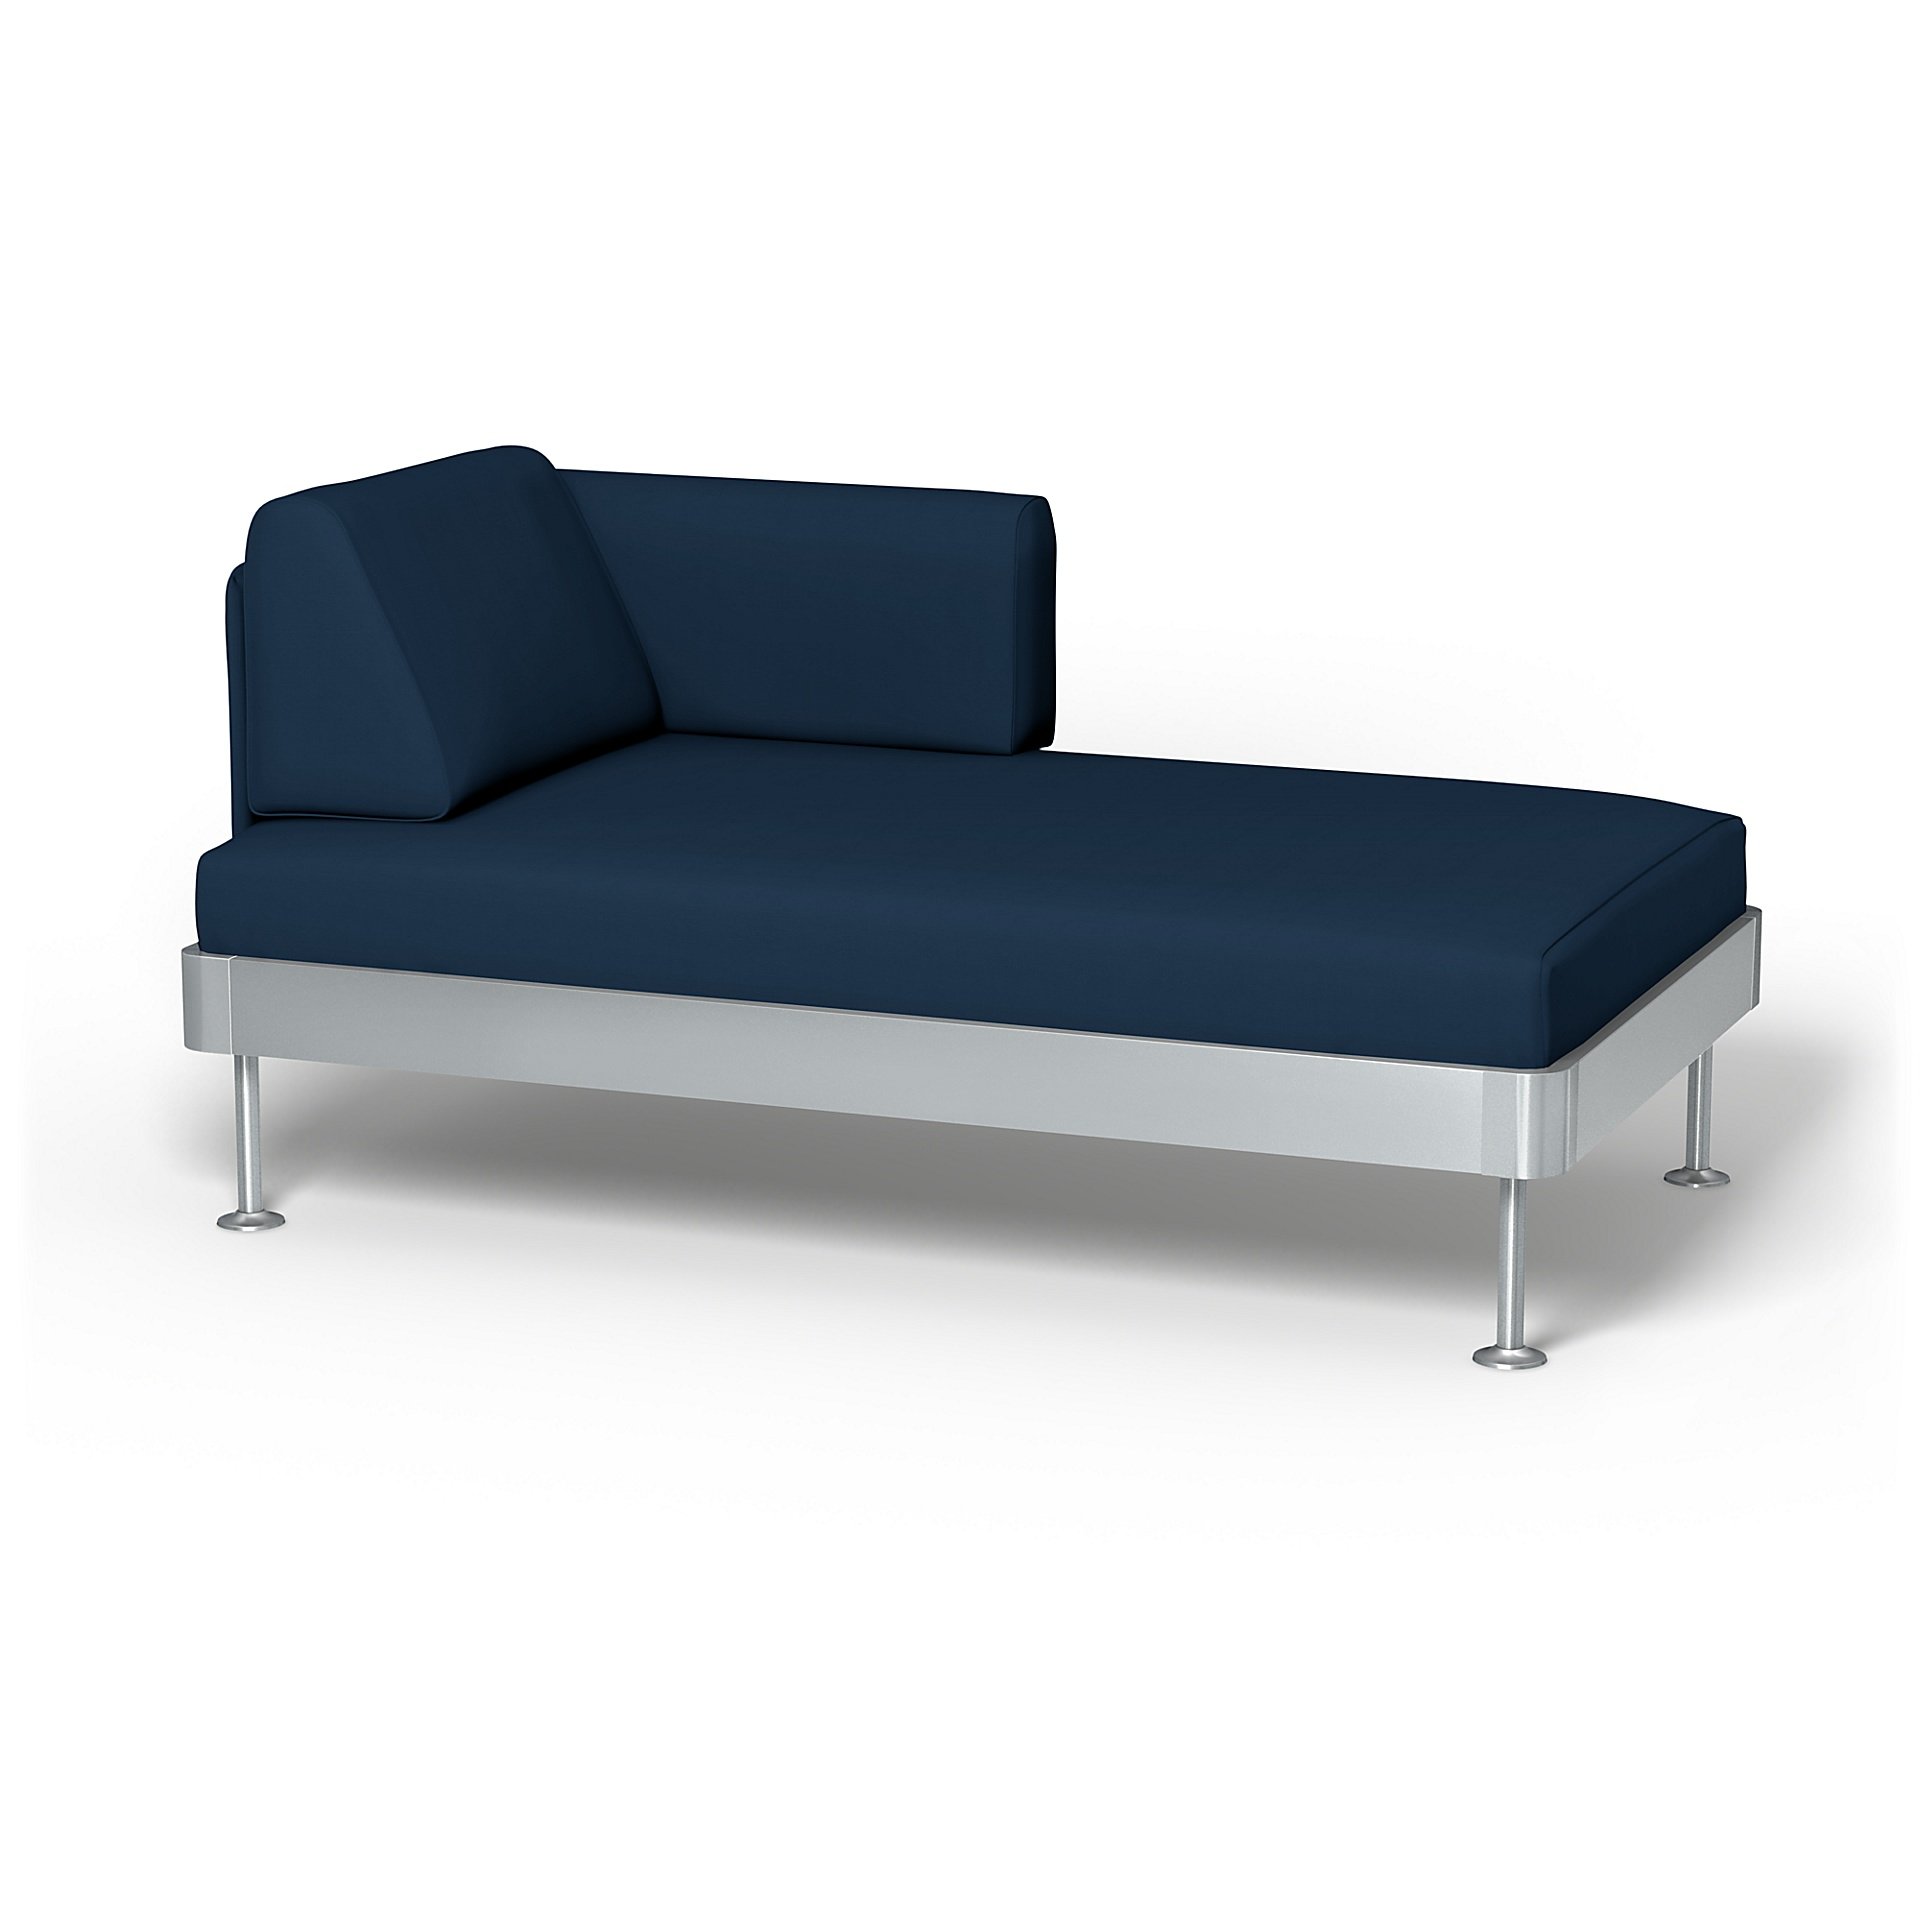 IKEA - Delaktig Chaise Longue Cover, Deep Navy Blue, Cotton - Bemz